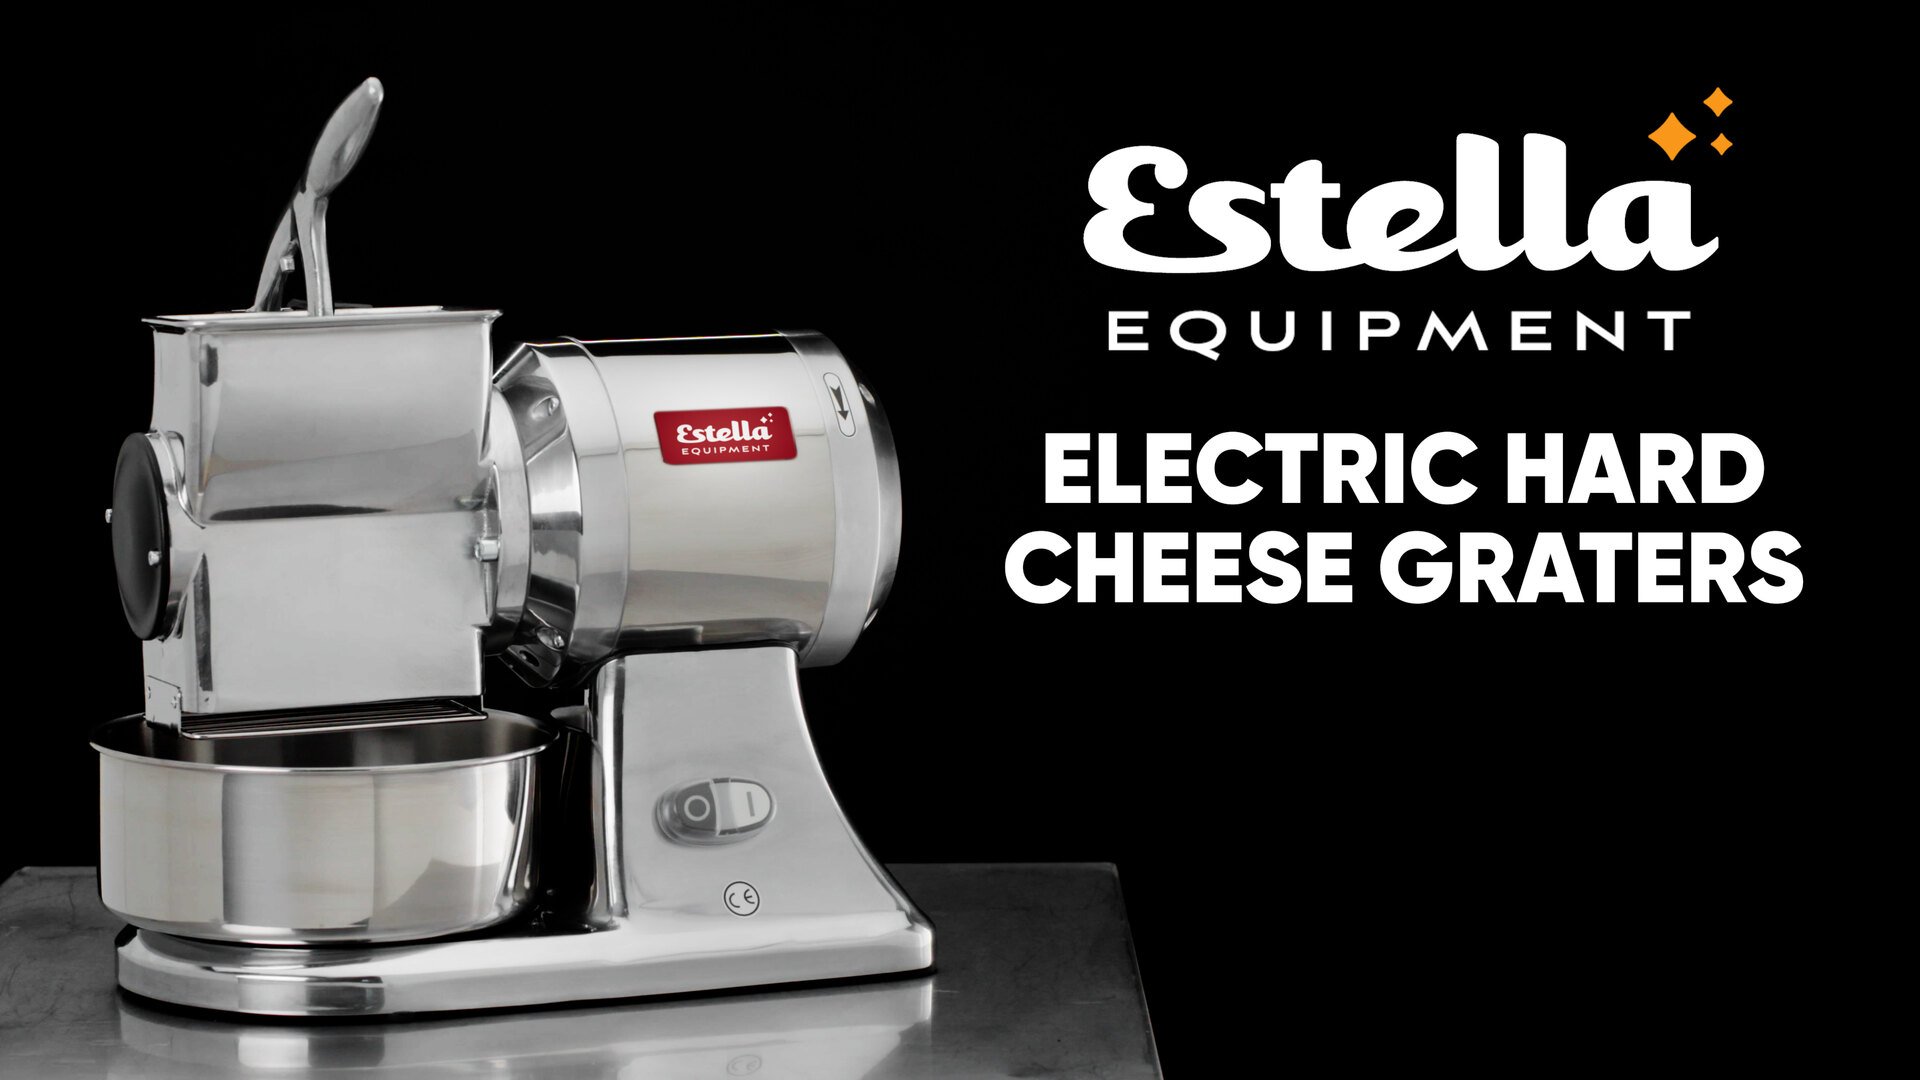 Estella CG34 Electric Hard Cheese Grater - 120V, 3/4 hp